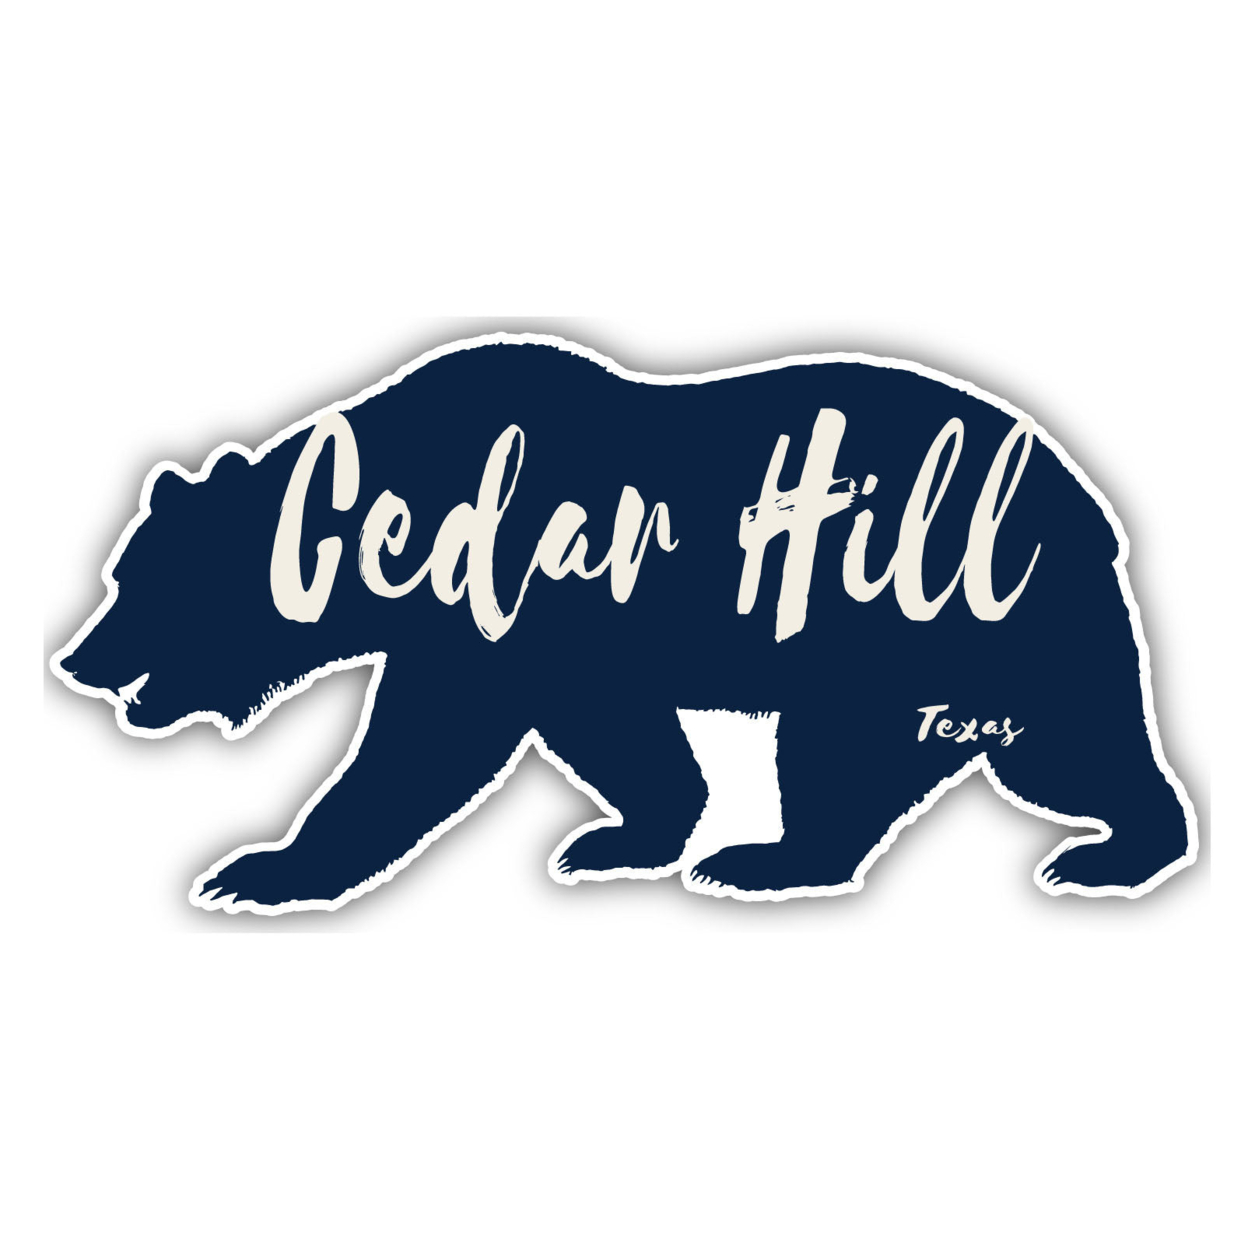 Cedar Hill Texas Souvenir Decorative Stickers (Choose Theme And Size) - 4-Pack, 6-Inch, Bear